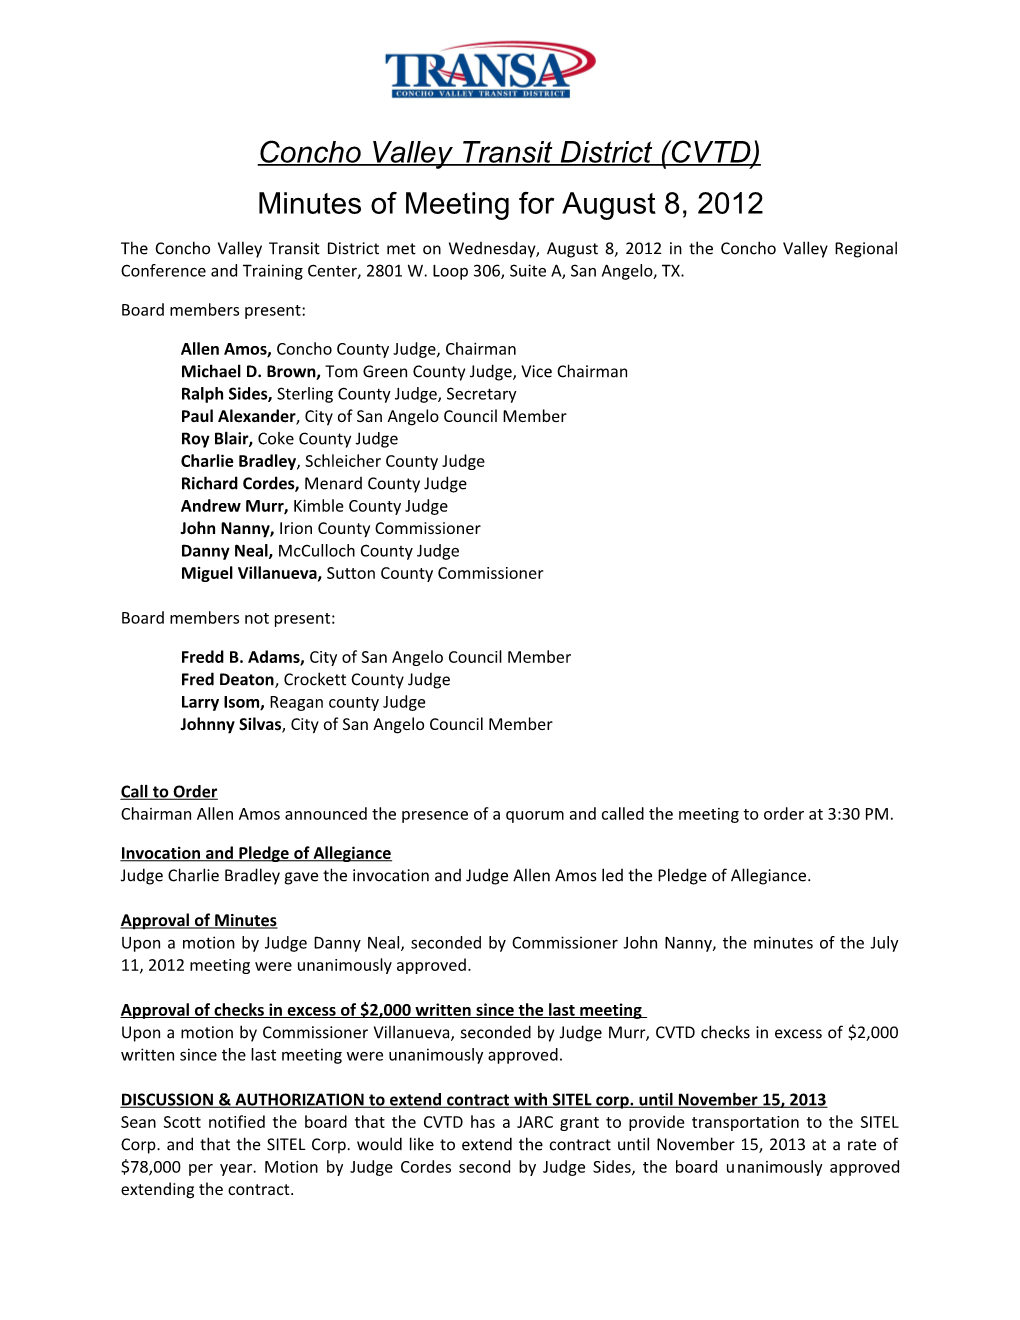 CVTD Meeting Minutes